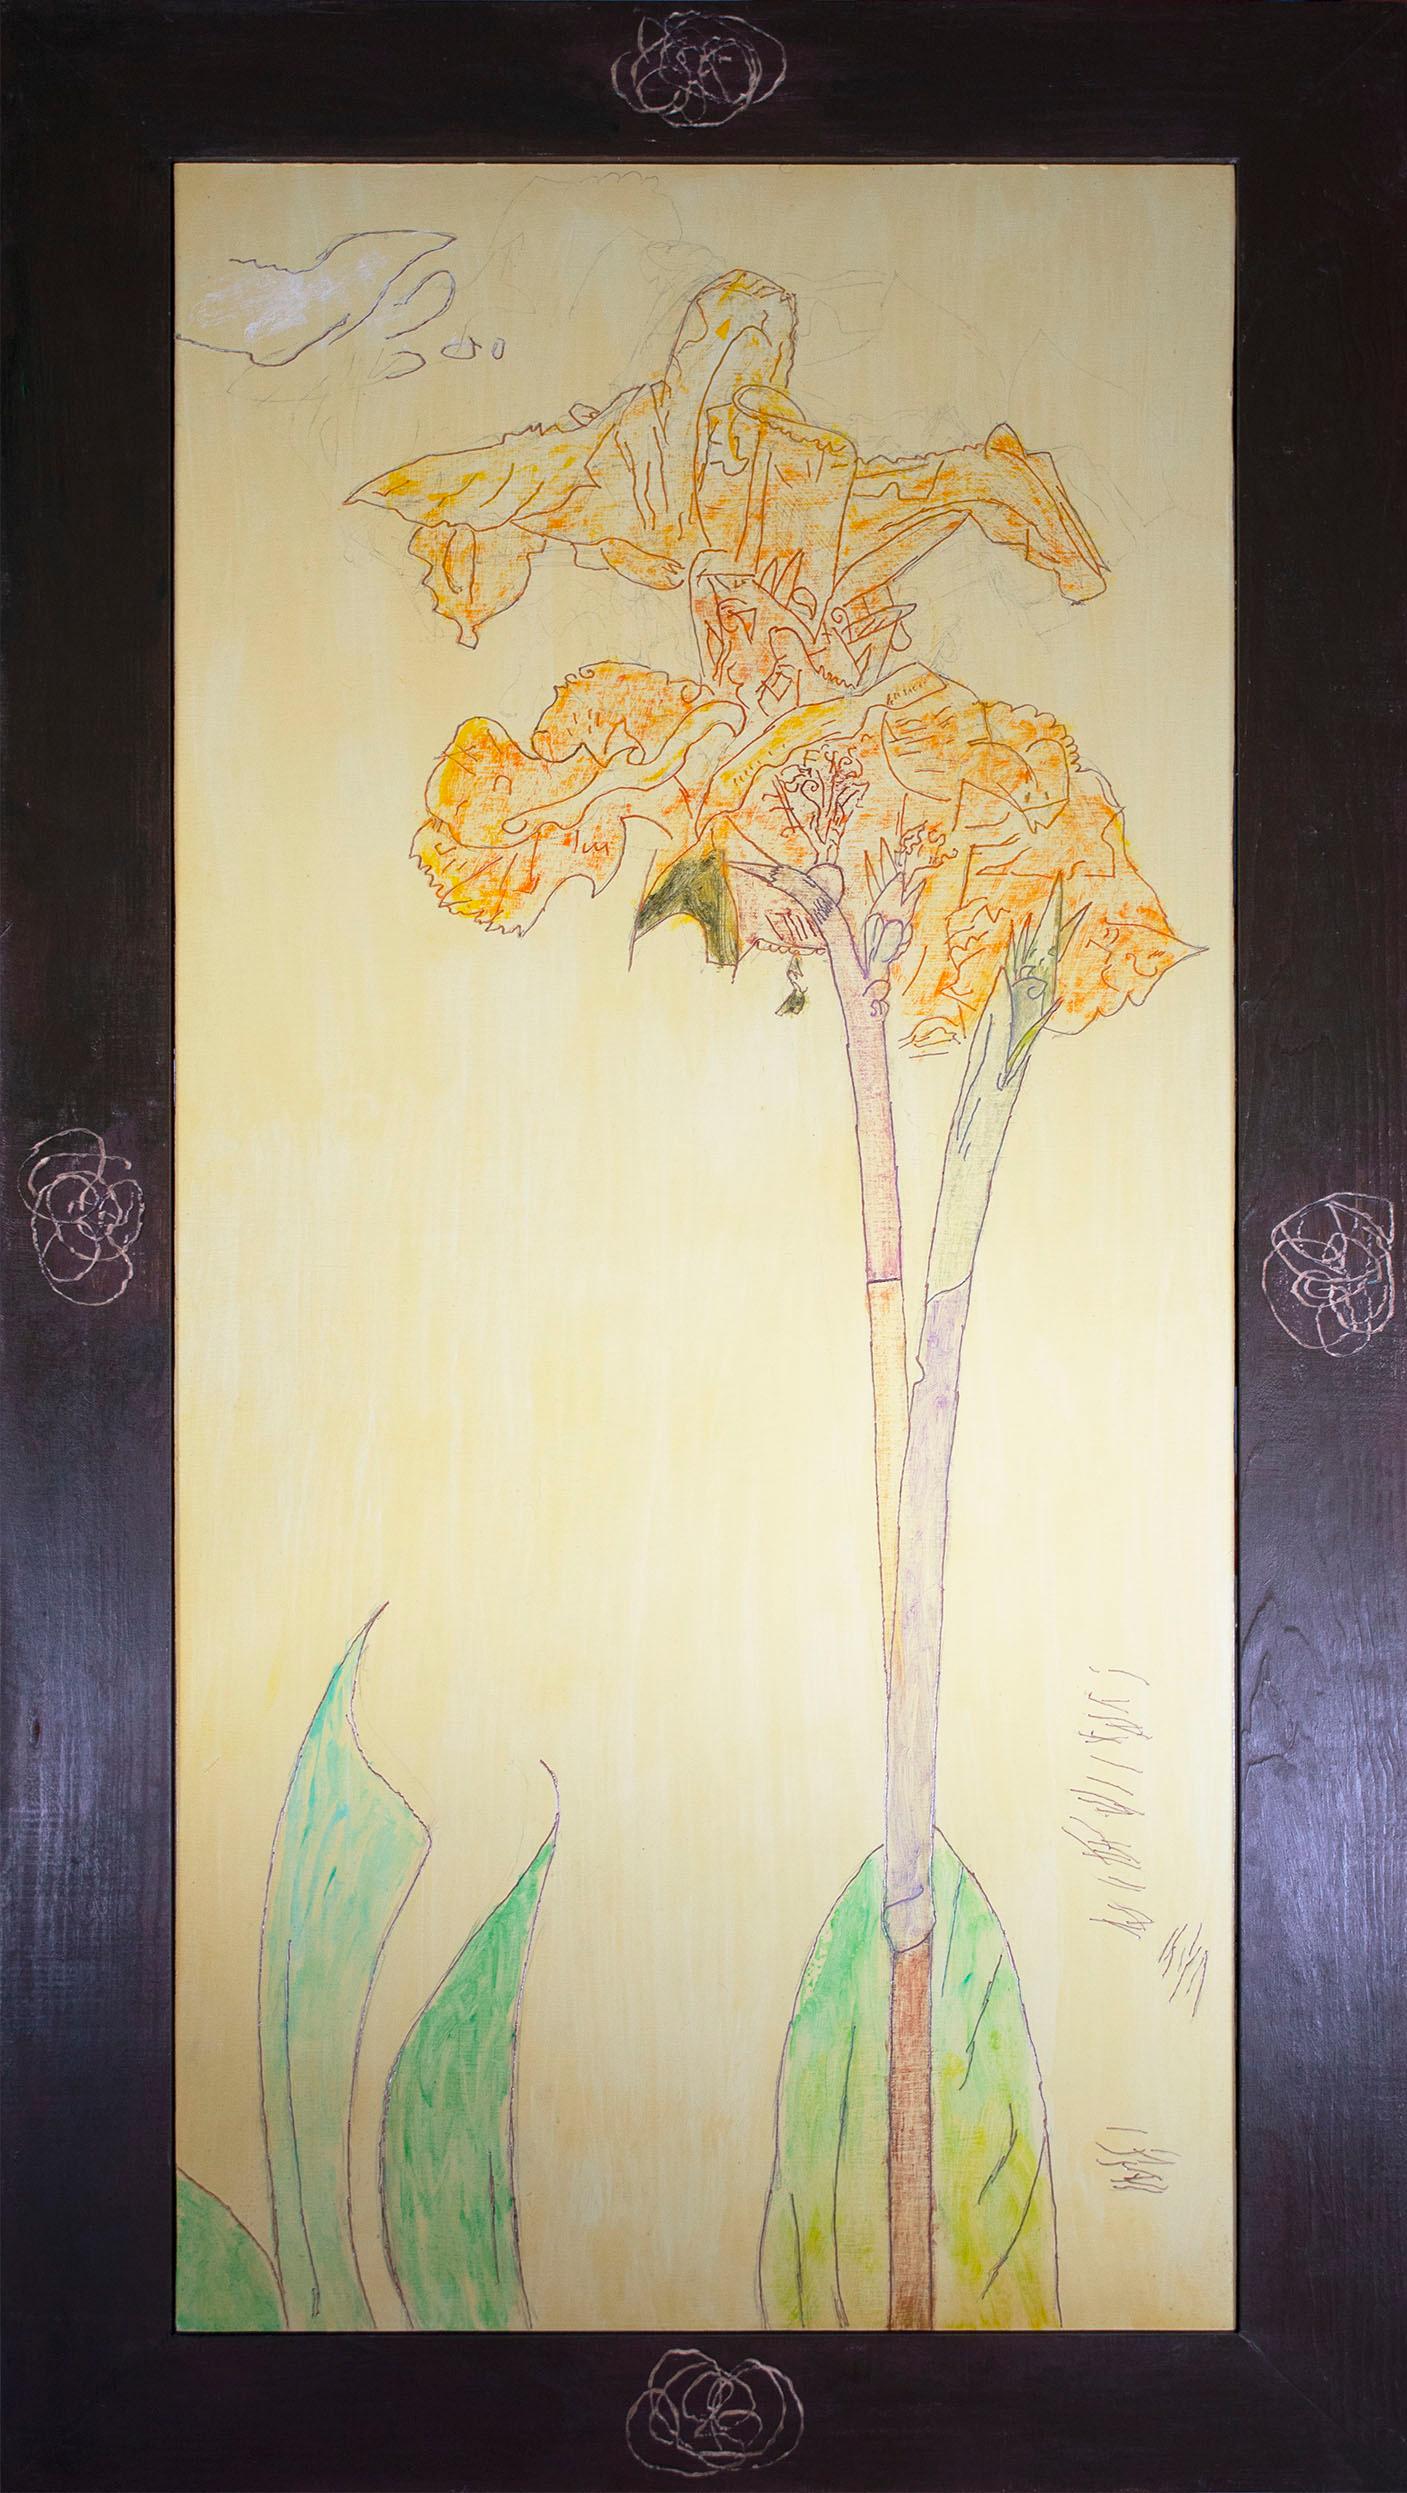 'Flower Dancer' original oil on wood painting signed by Robert Richter